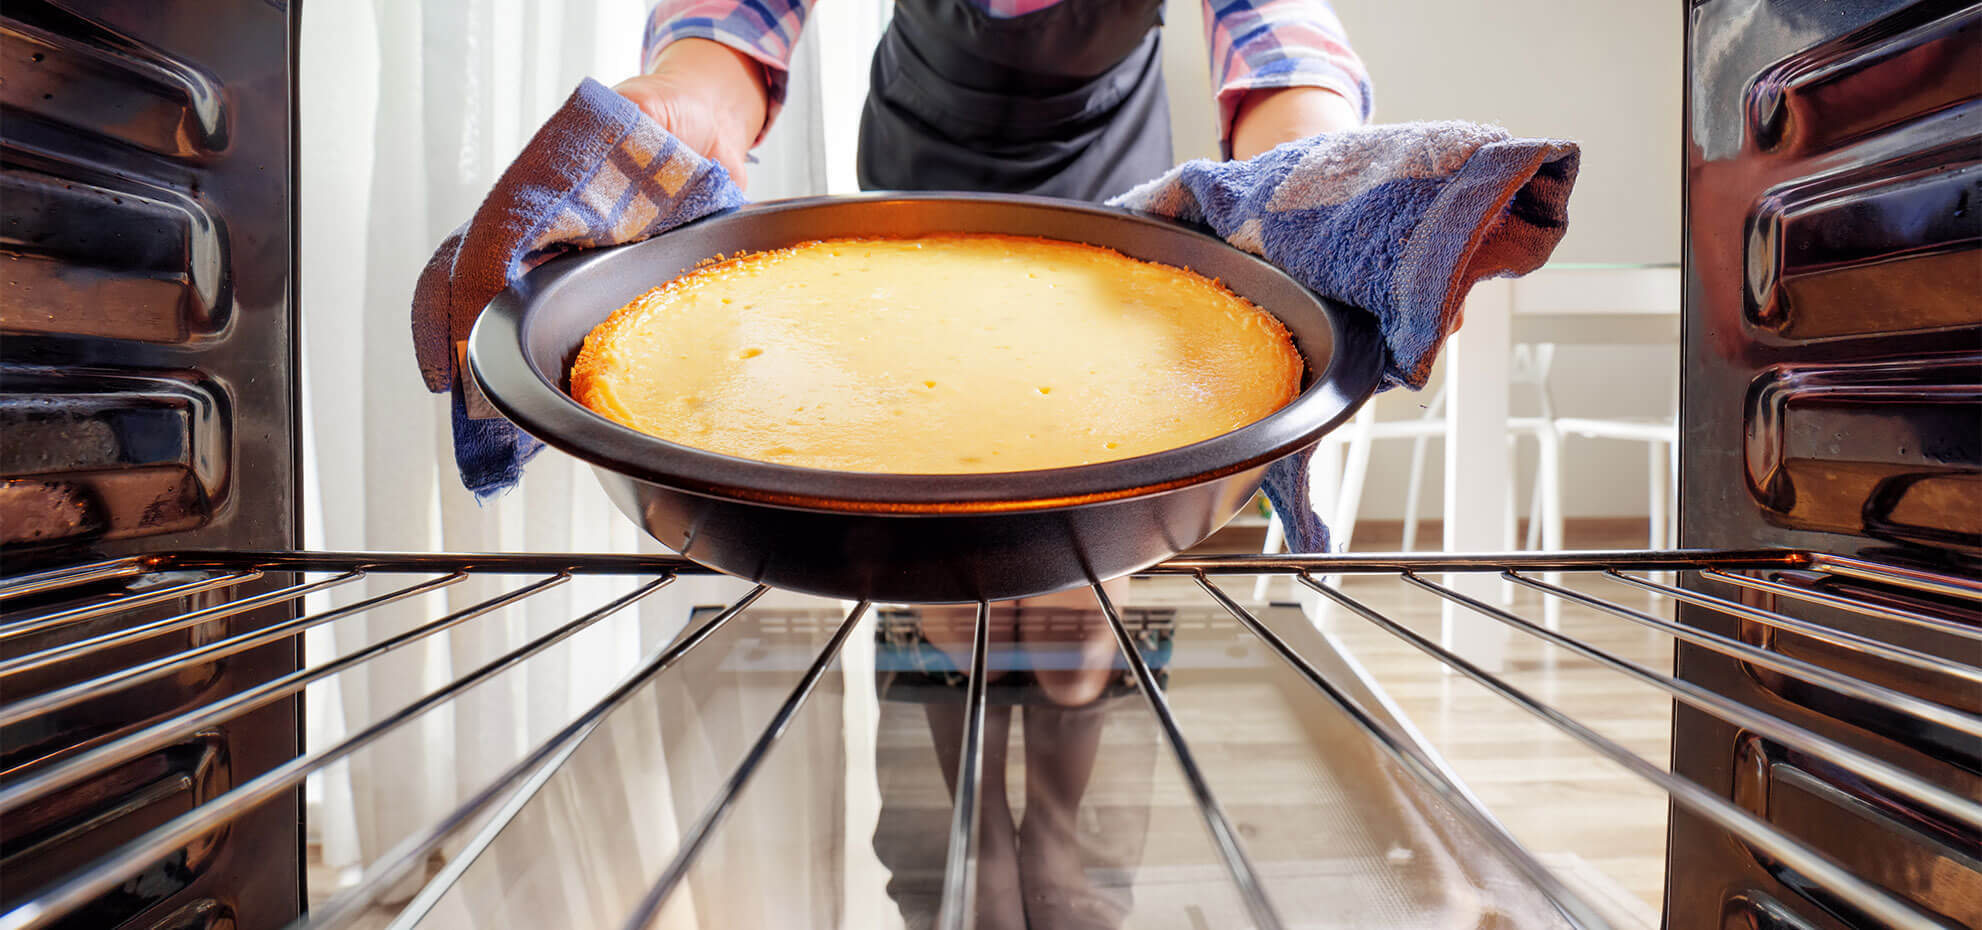 Seorang wanita tengah memasukkan adonan kue ke dalam oven